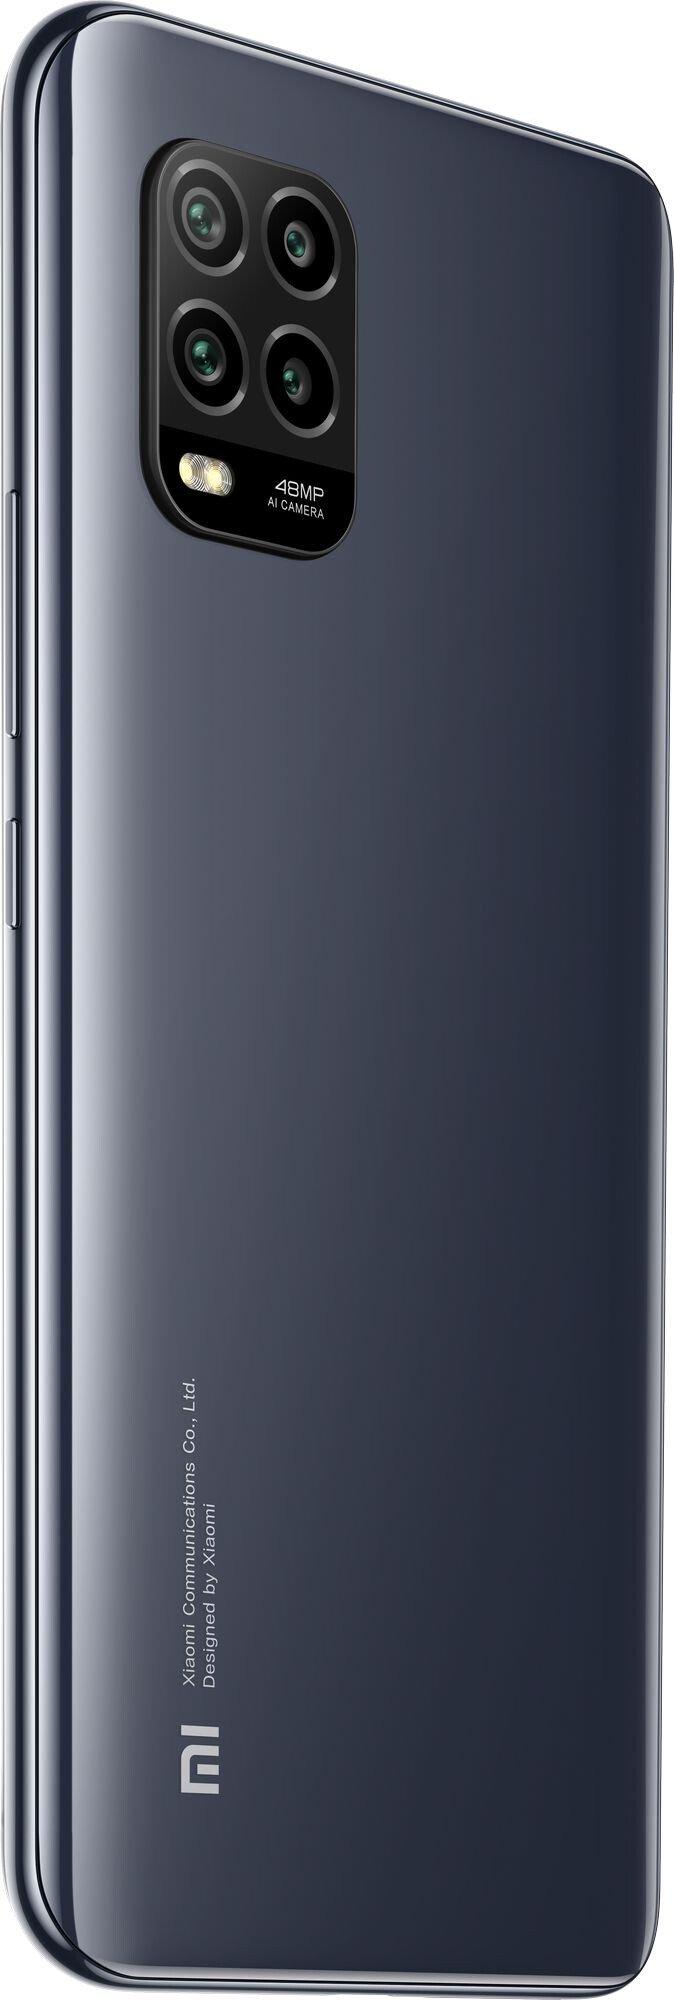 Смартфон Xiaomi Mi 10 Lite 5G 6/128Gb Cosmic Grey заказать